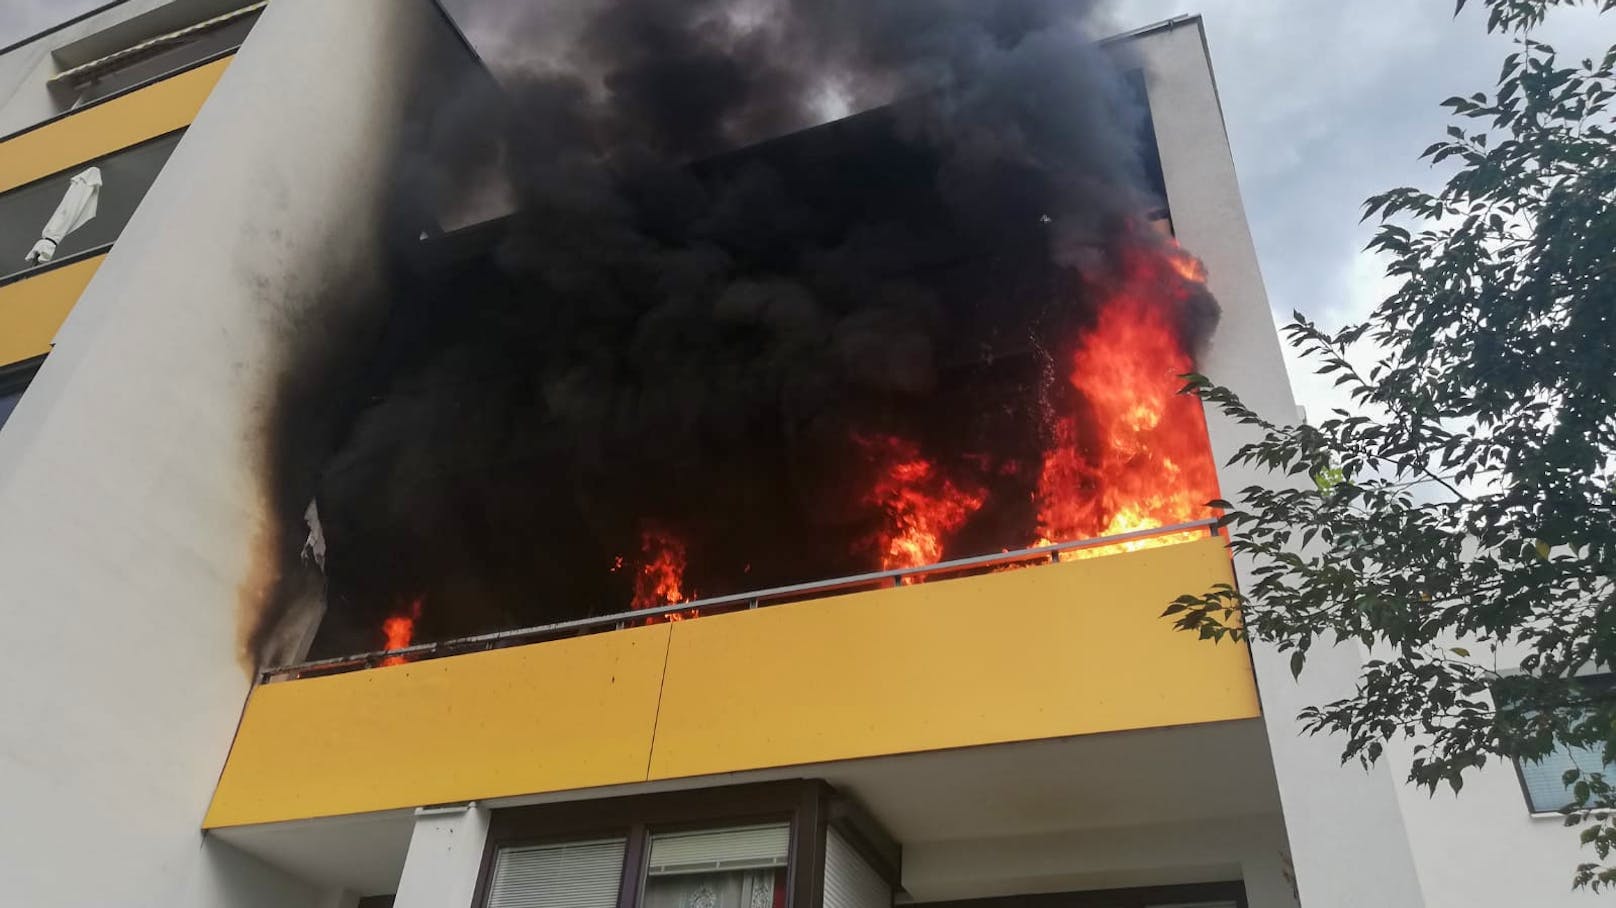 Balkonbrand Innsbruck Feuerwehr rettet Katze (10. August 2020)